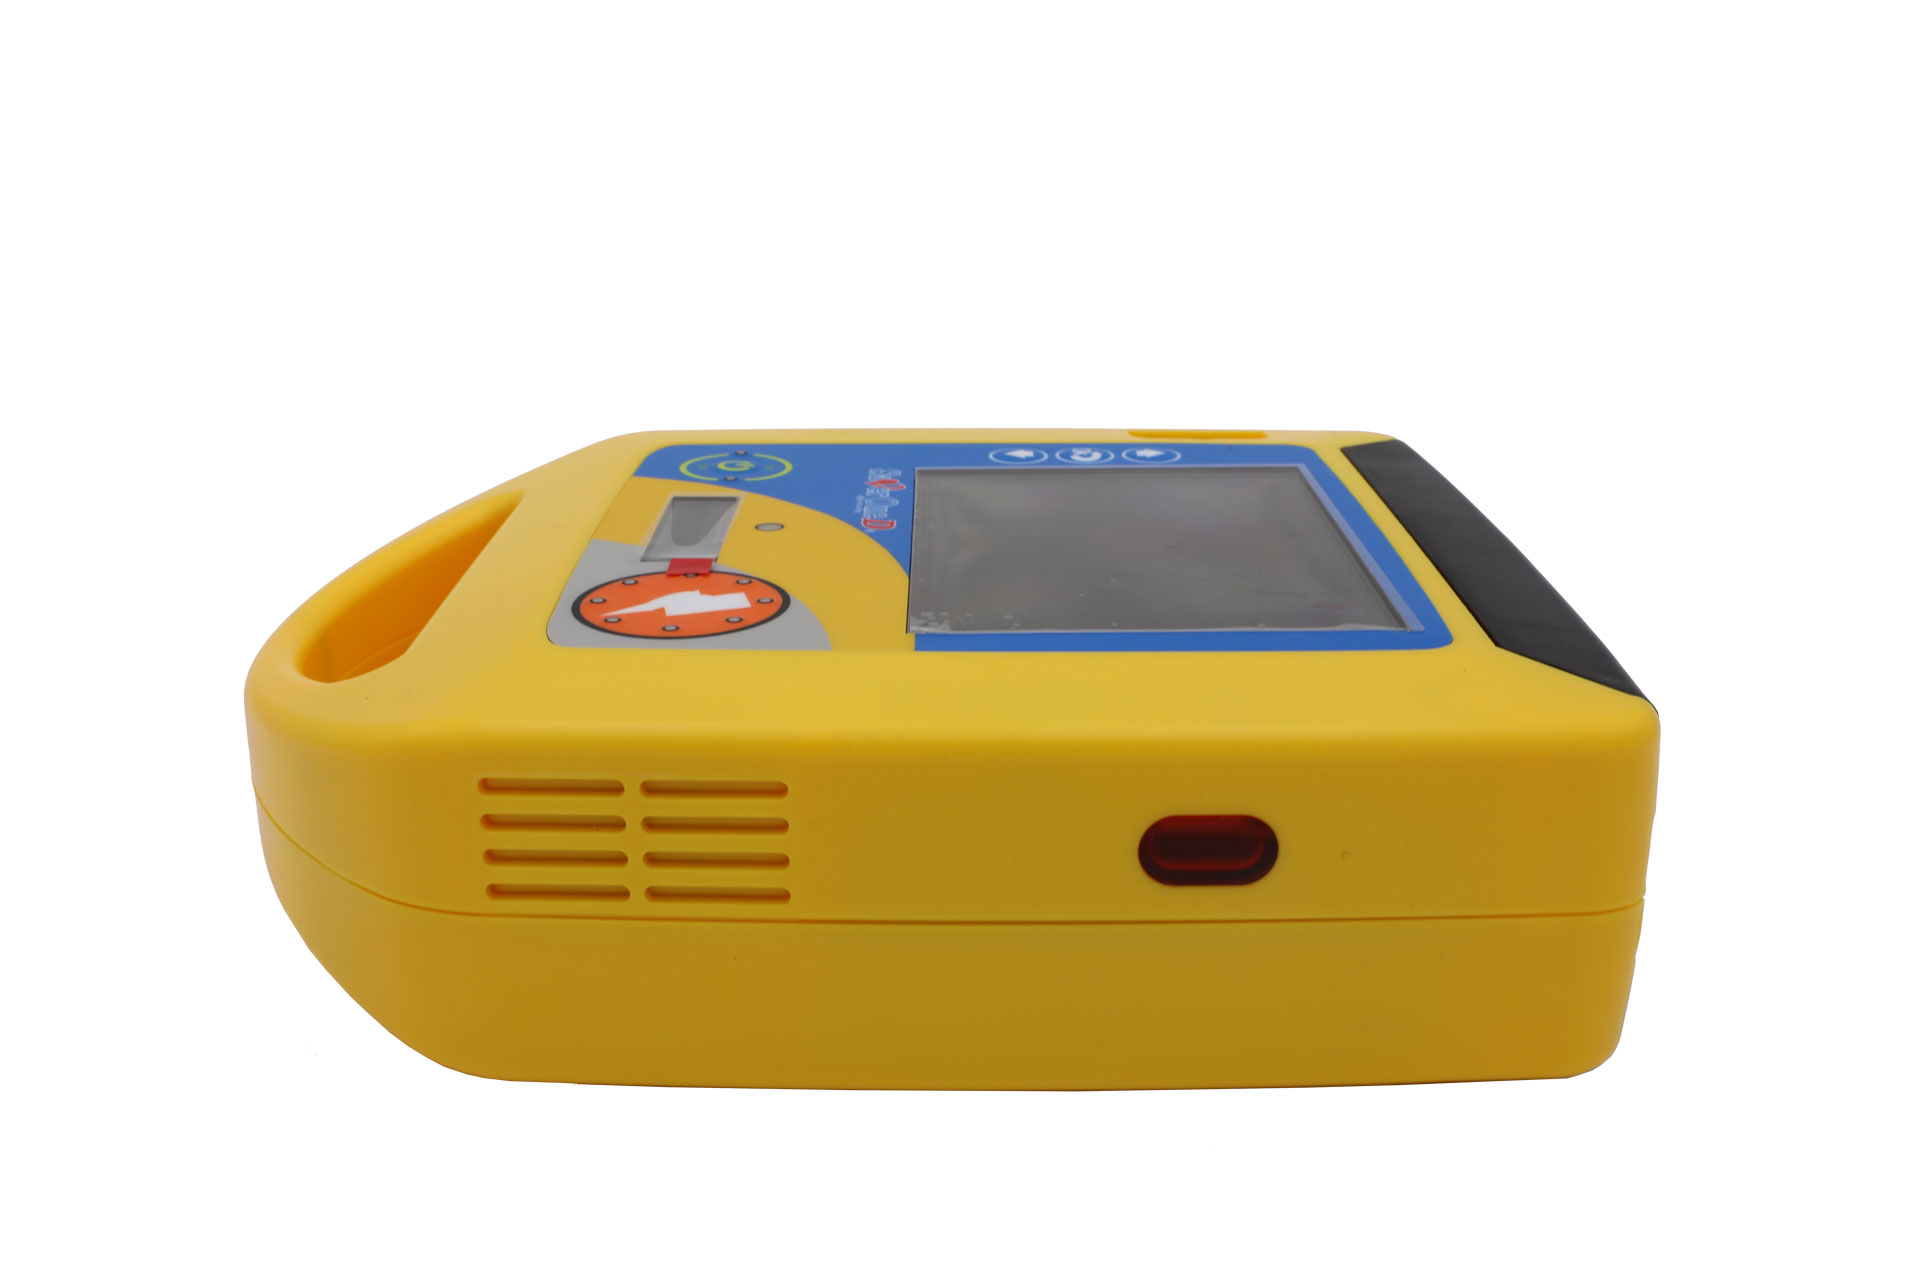 Saver One AED Profi Defibrillator Modell D mit 360 Joule Upgrade